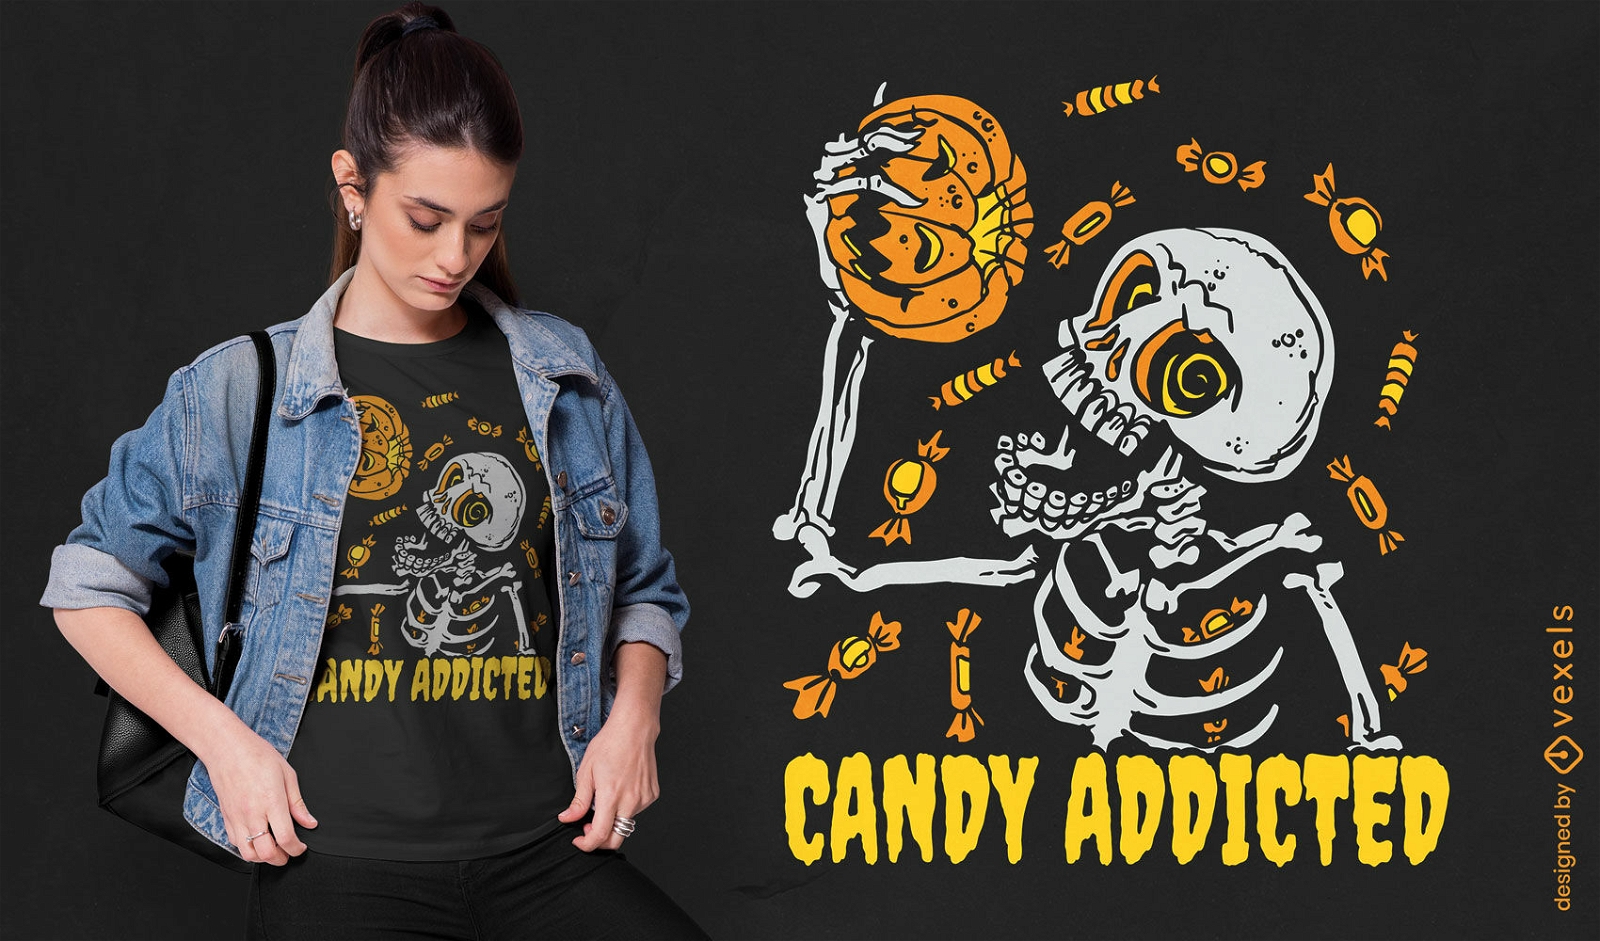 Candy addicted skeleton t-shirt design